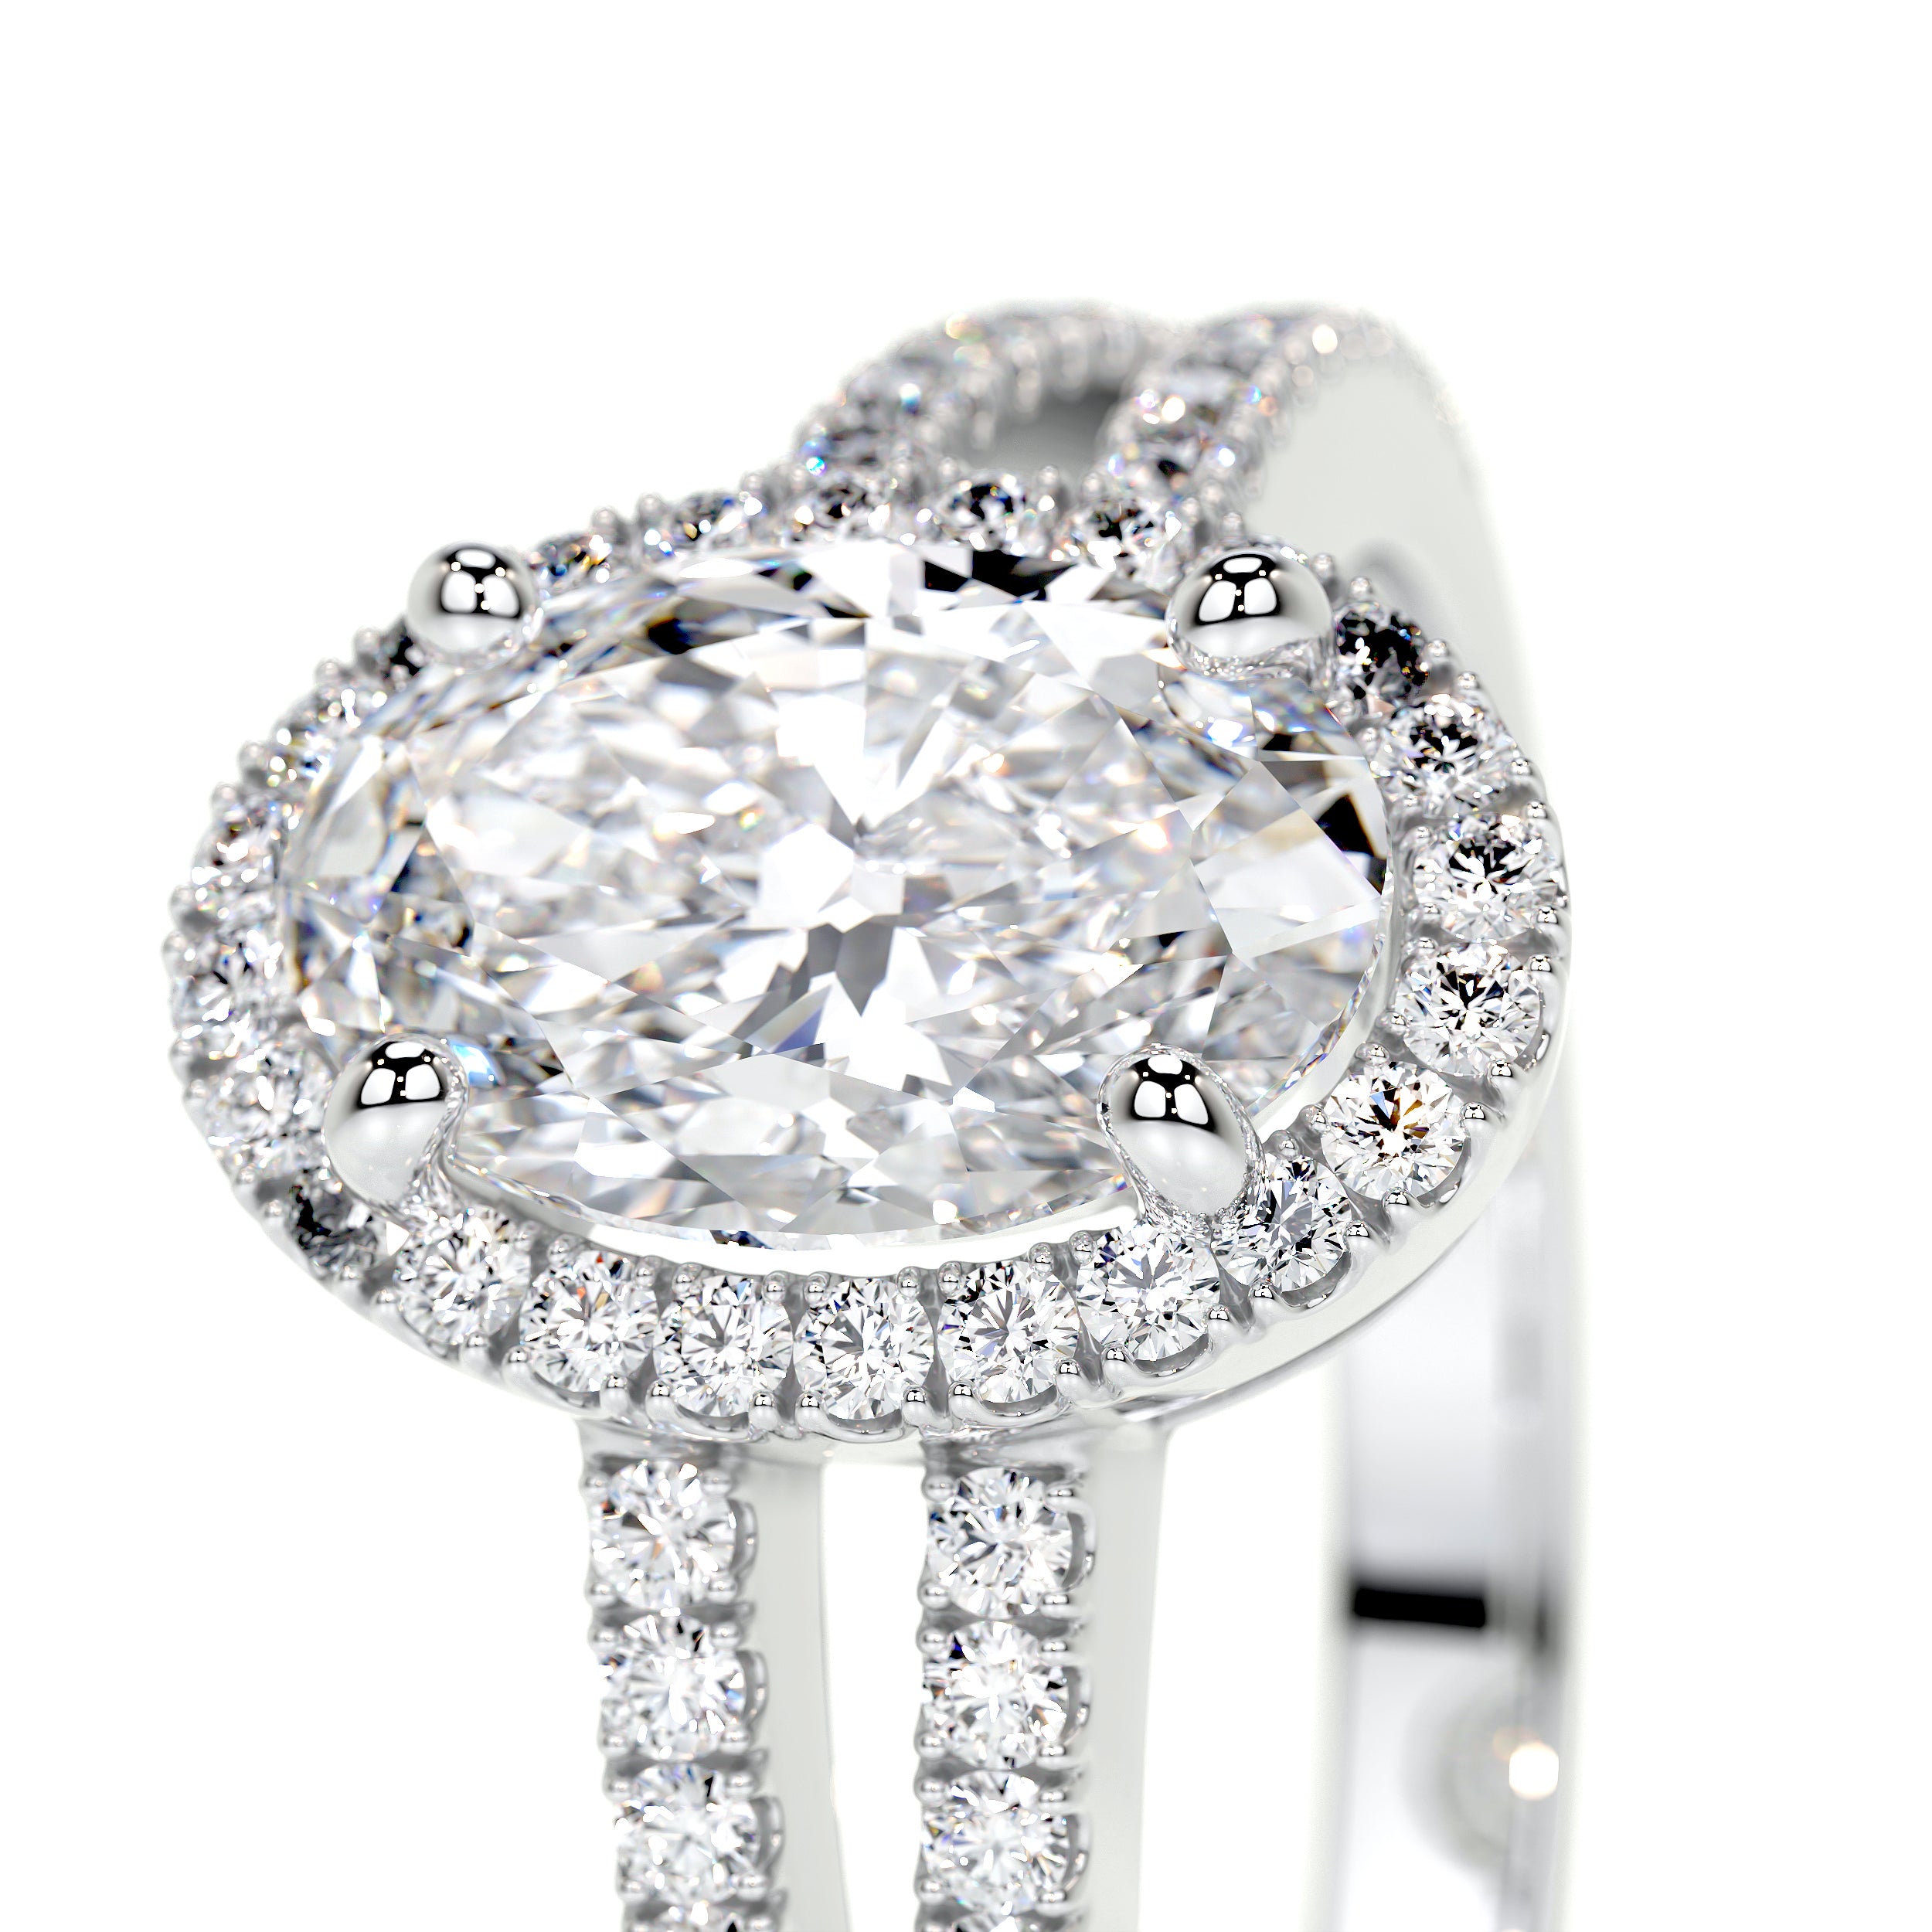 Brielle Lab Grown Diamond Ring   (1.2 Carat) -Platinum